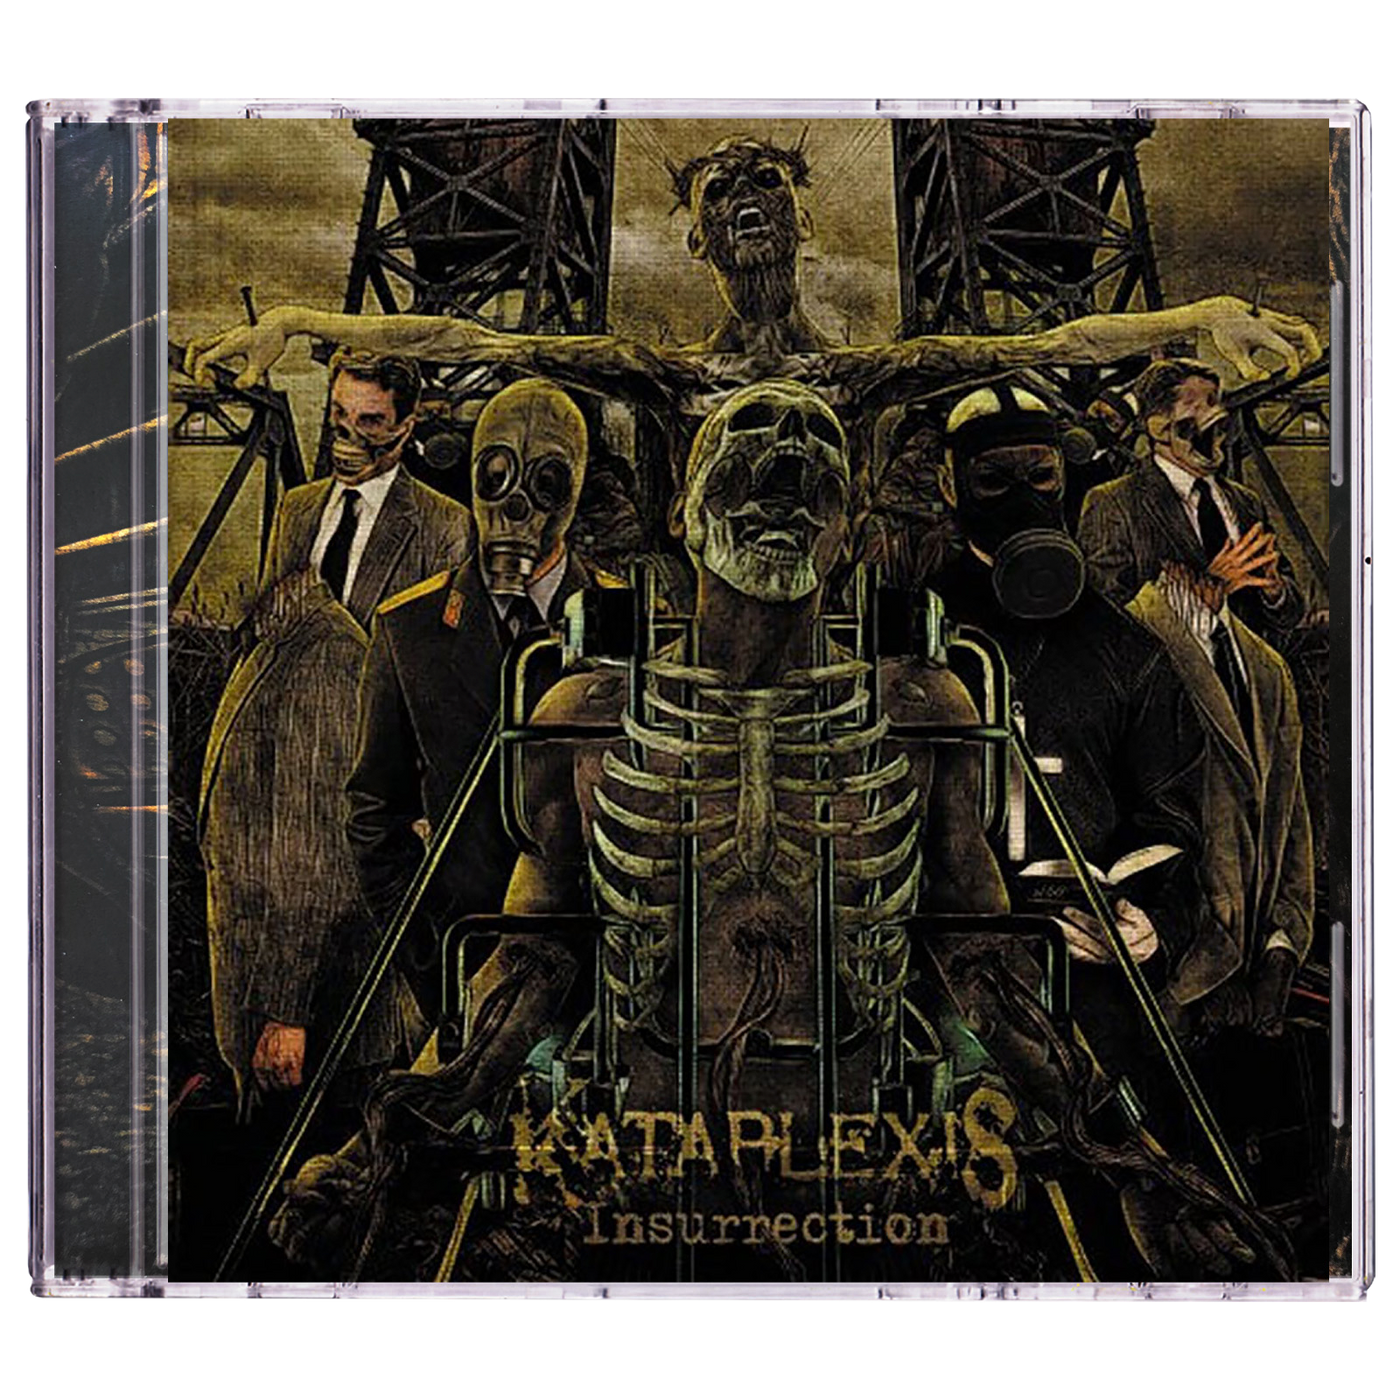 Kataplexis 'Insurrection' CD